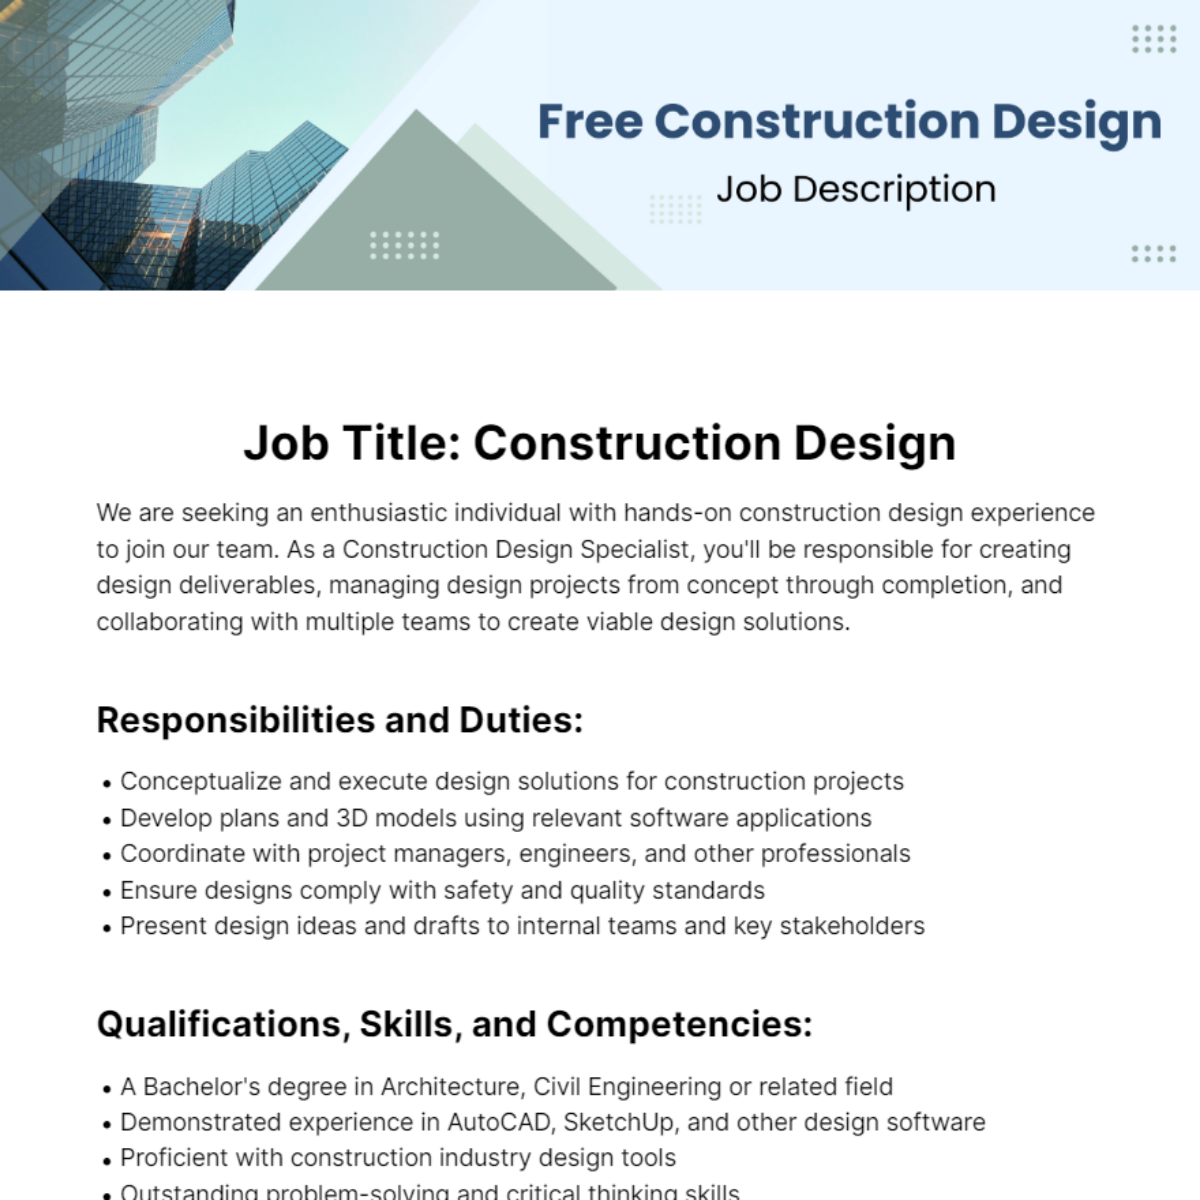 Free Construction Design Job Description Template